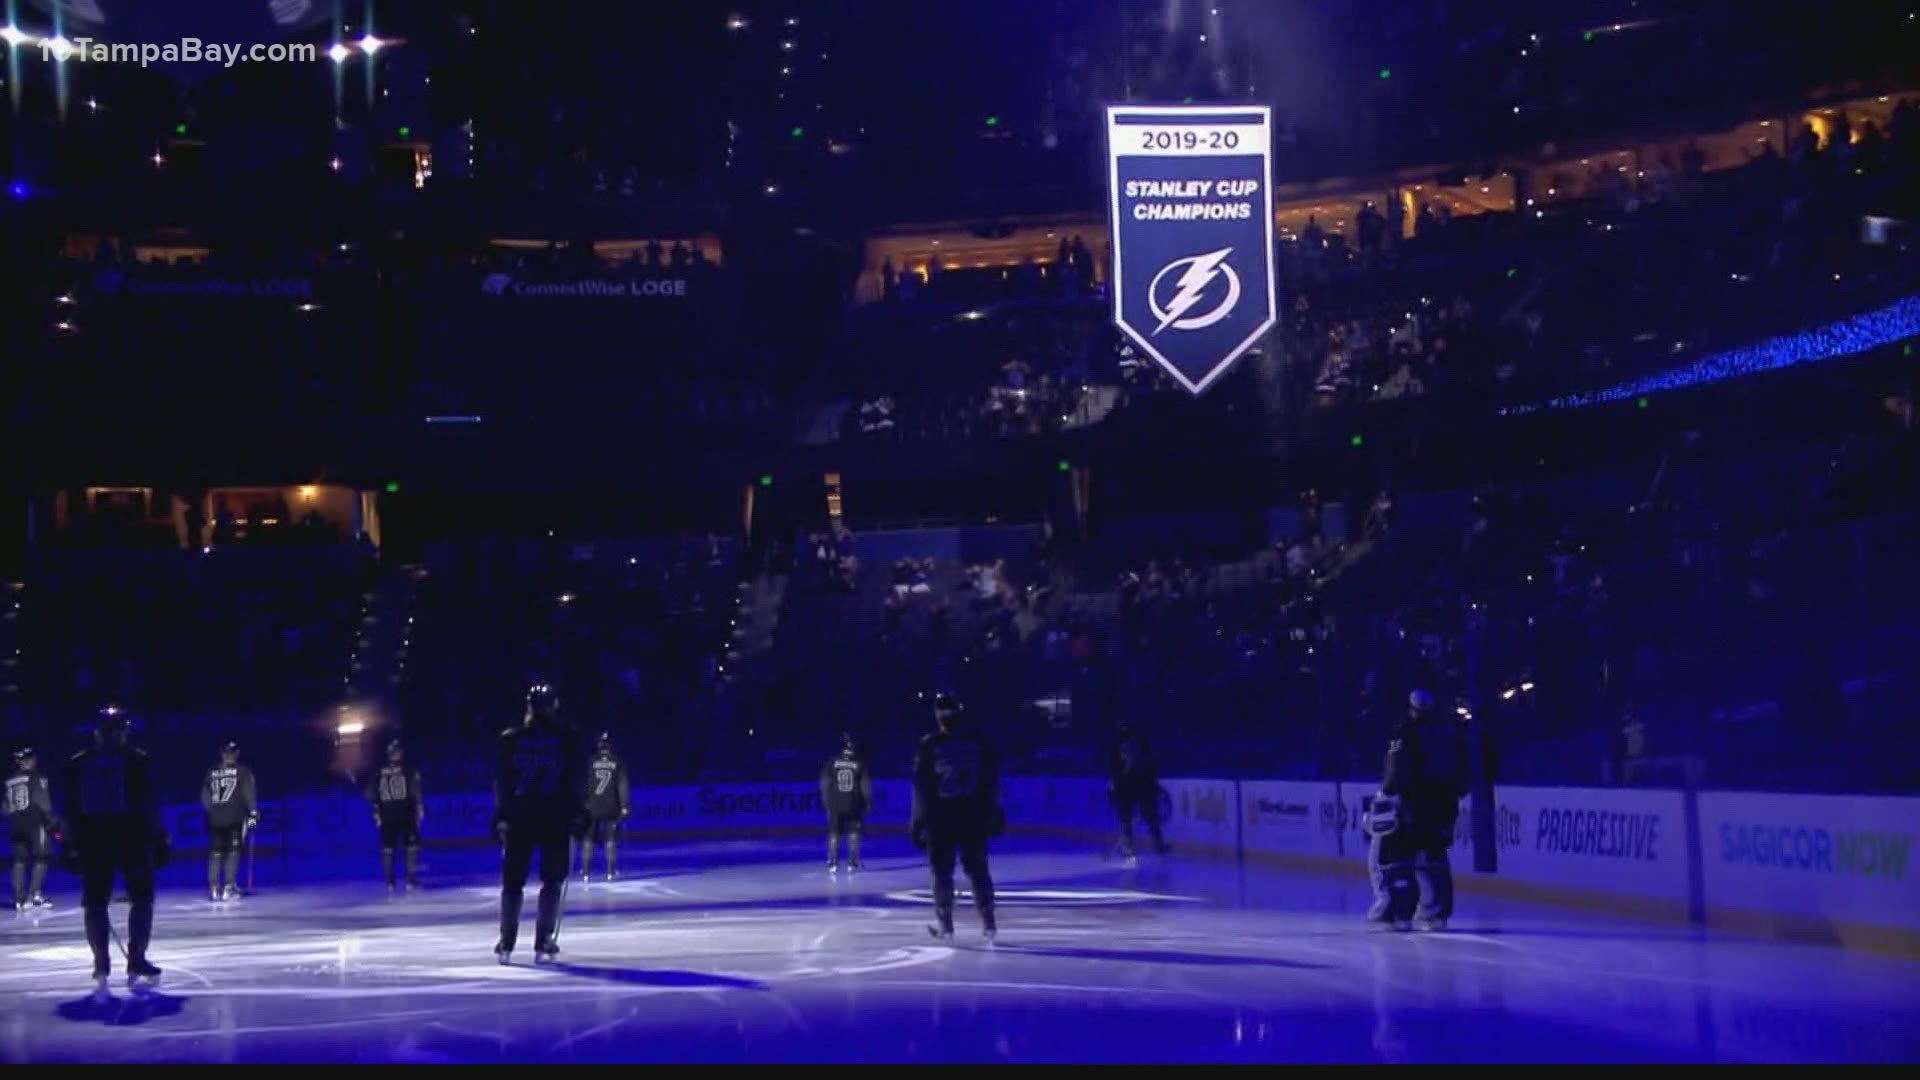 NHL Tampa Bay Lightning 6x19 3D Stadium Banner